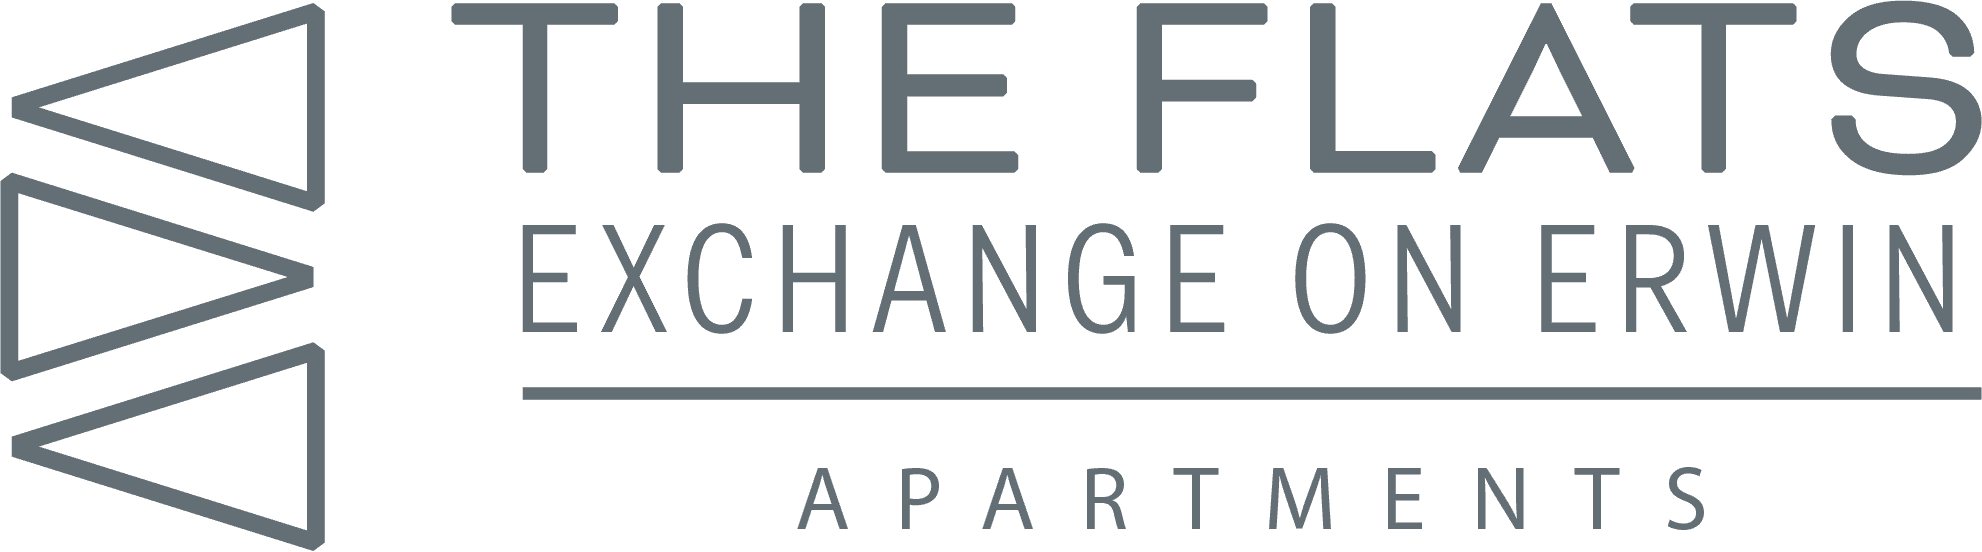 The Flats Exchange on Erwin Apartments Logo